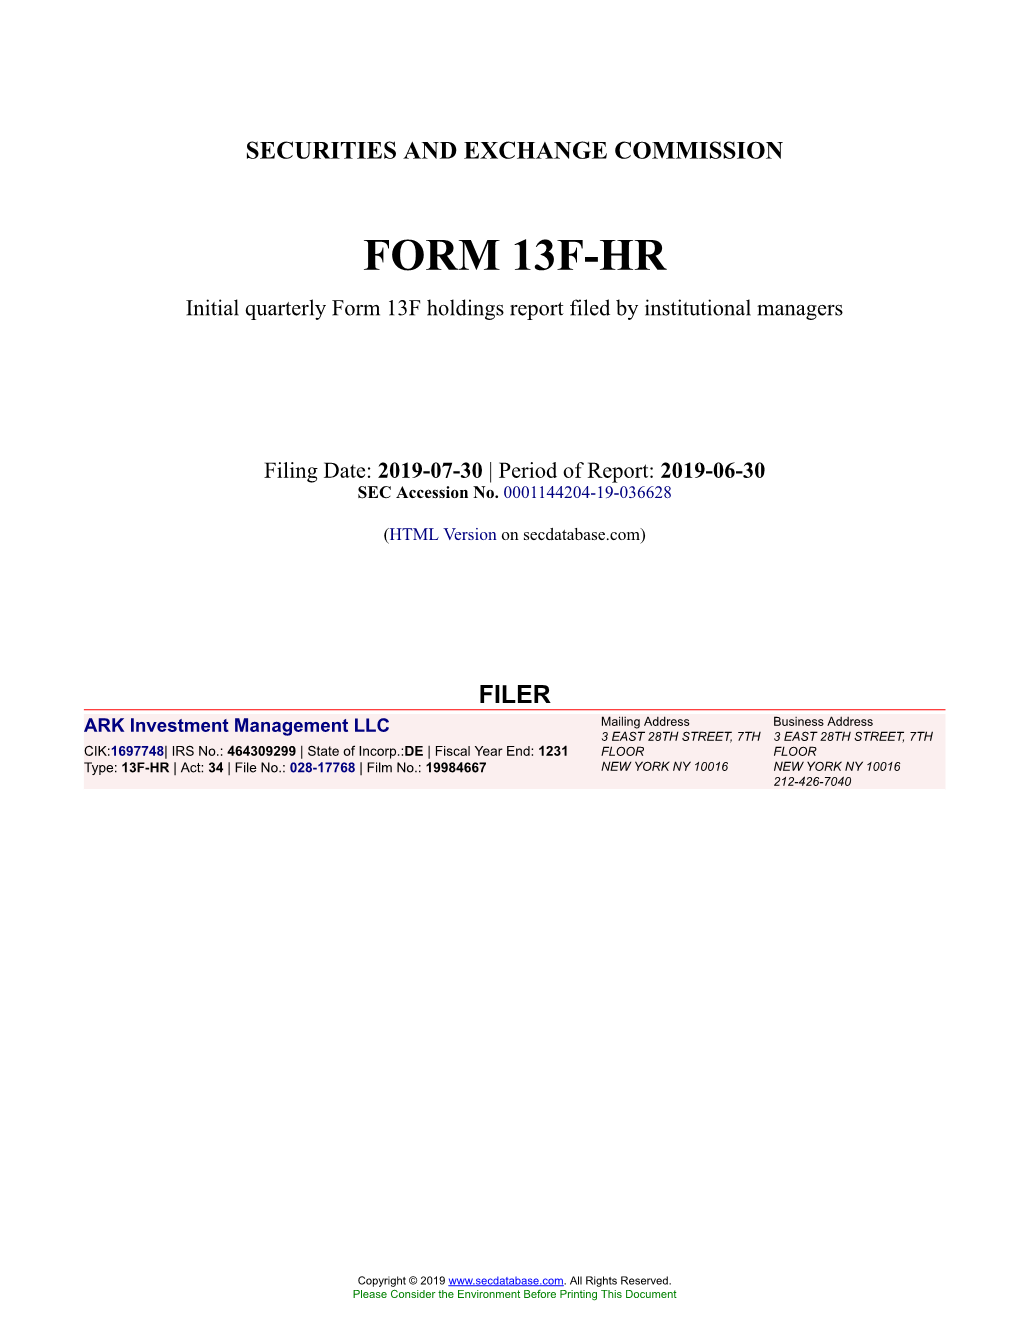 ARK Investment Management LLC Form 13F-HR Filed 2019-07-30